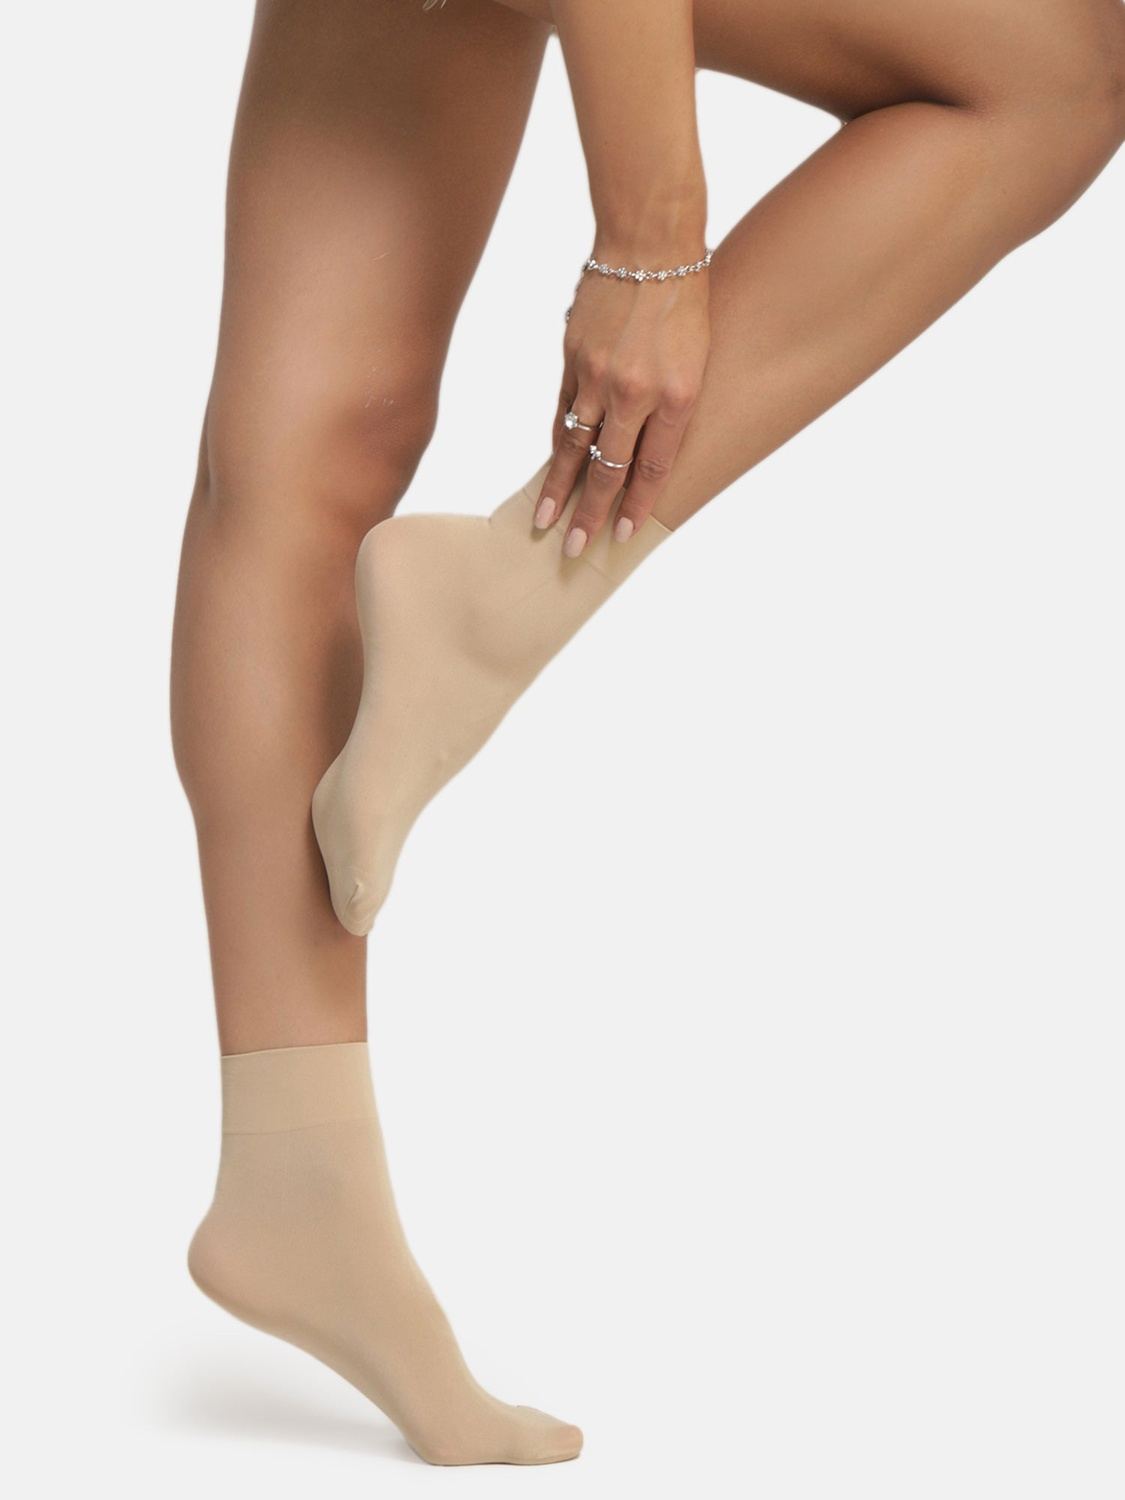 Ankle Length Opaque Socks - Skin